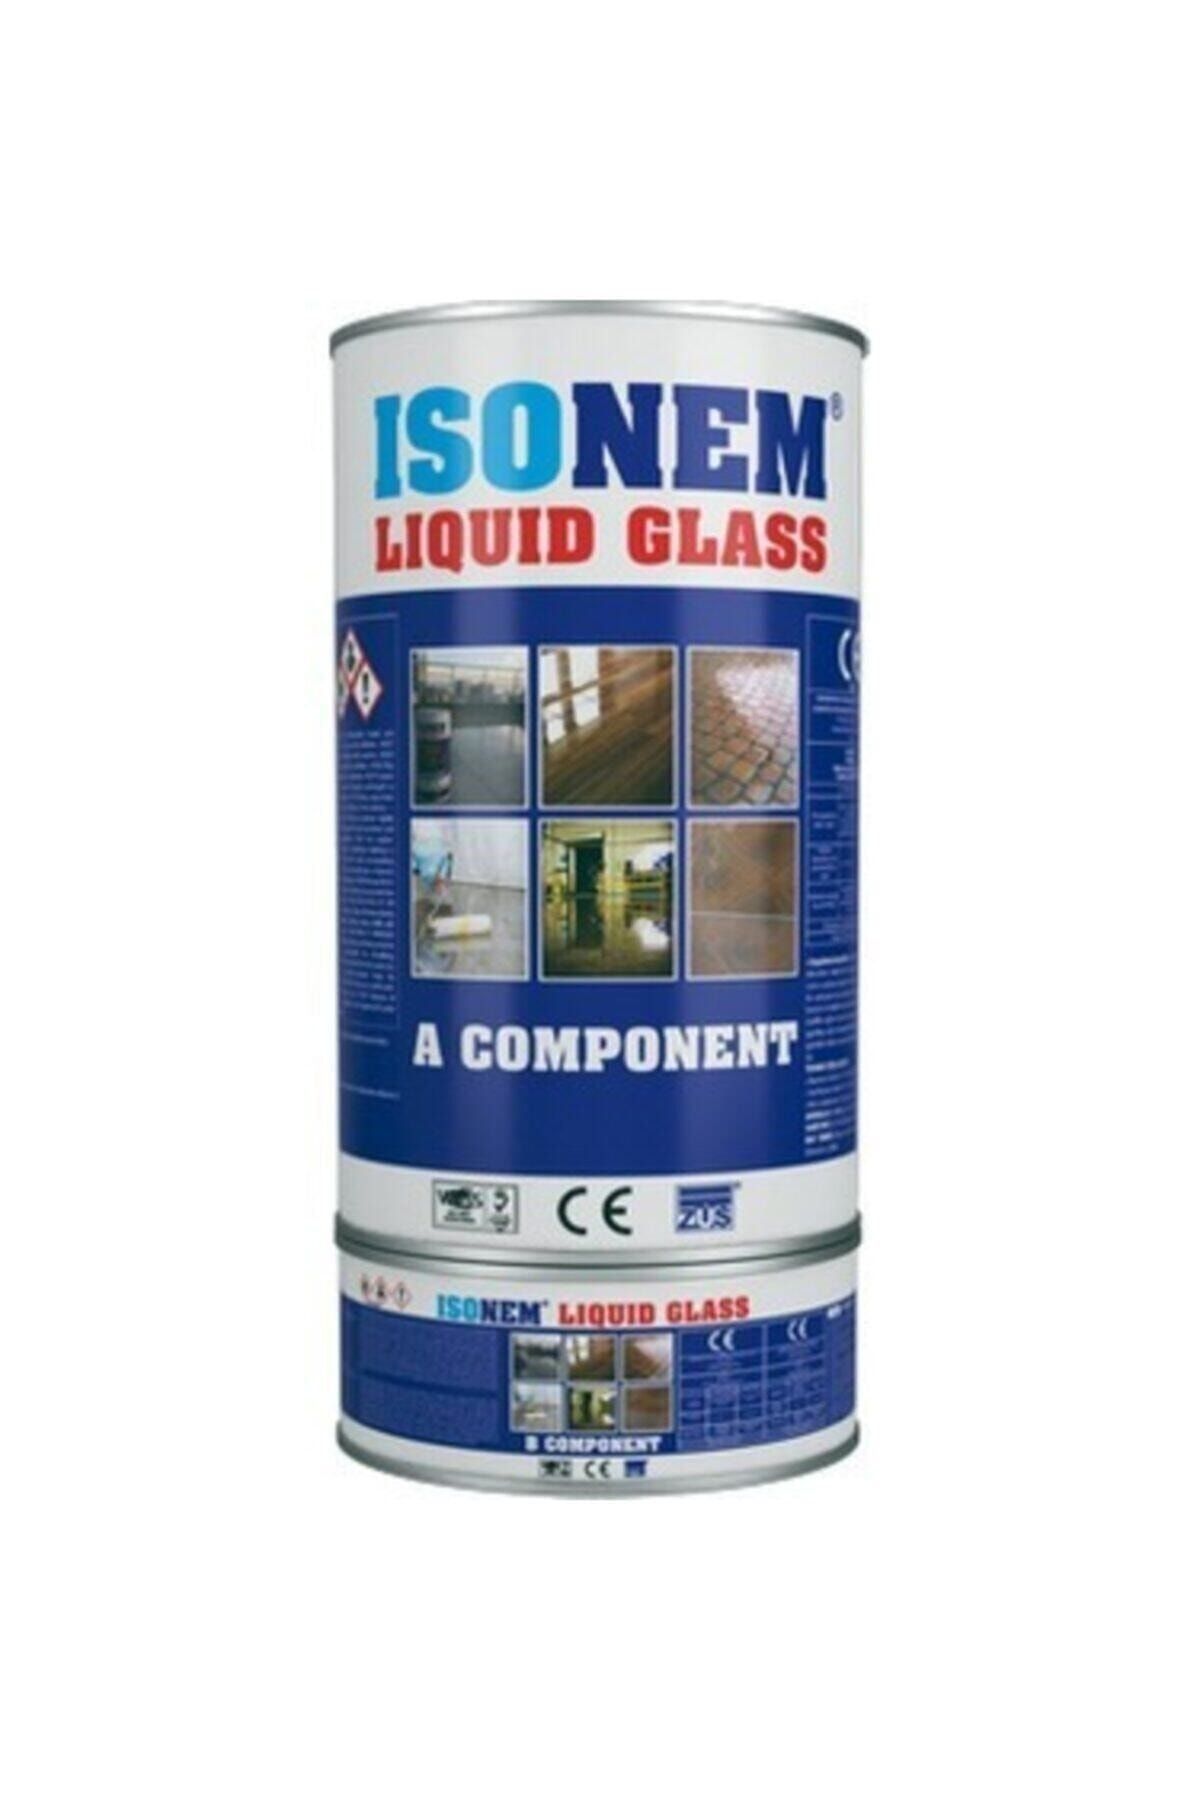 Isonem Liquid Glass Sıvı Cam Şeffaf Ve Parlak Su Yalıtımı 4 Kg